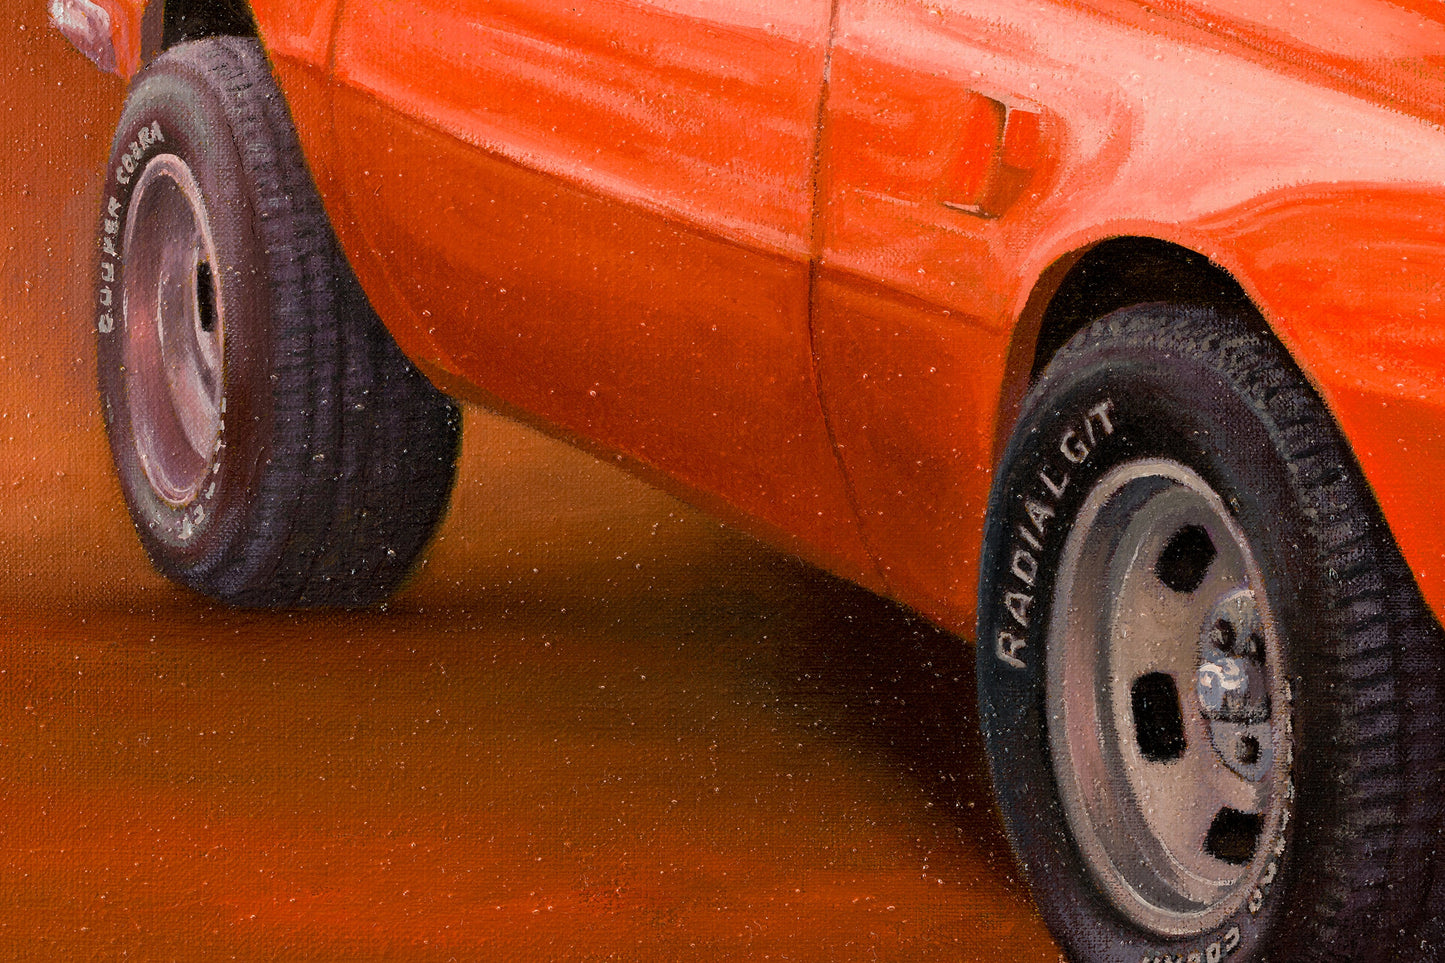 Pontiac Firebird 1971